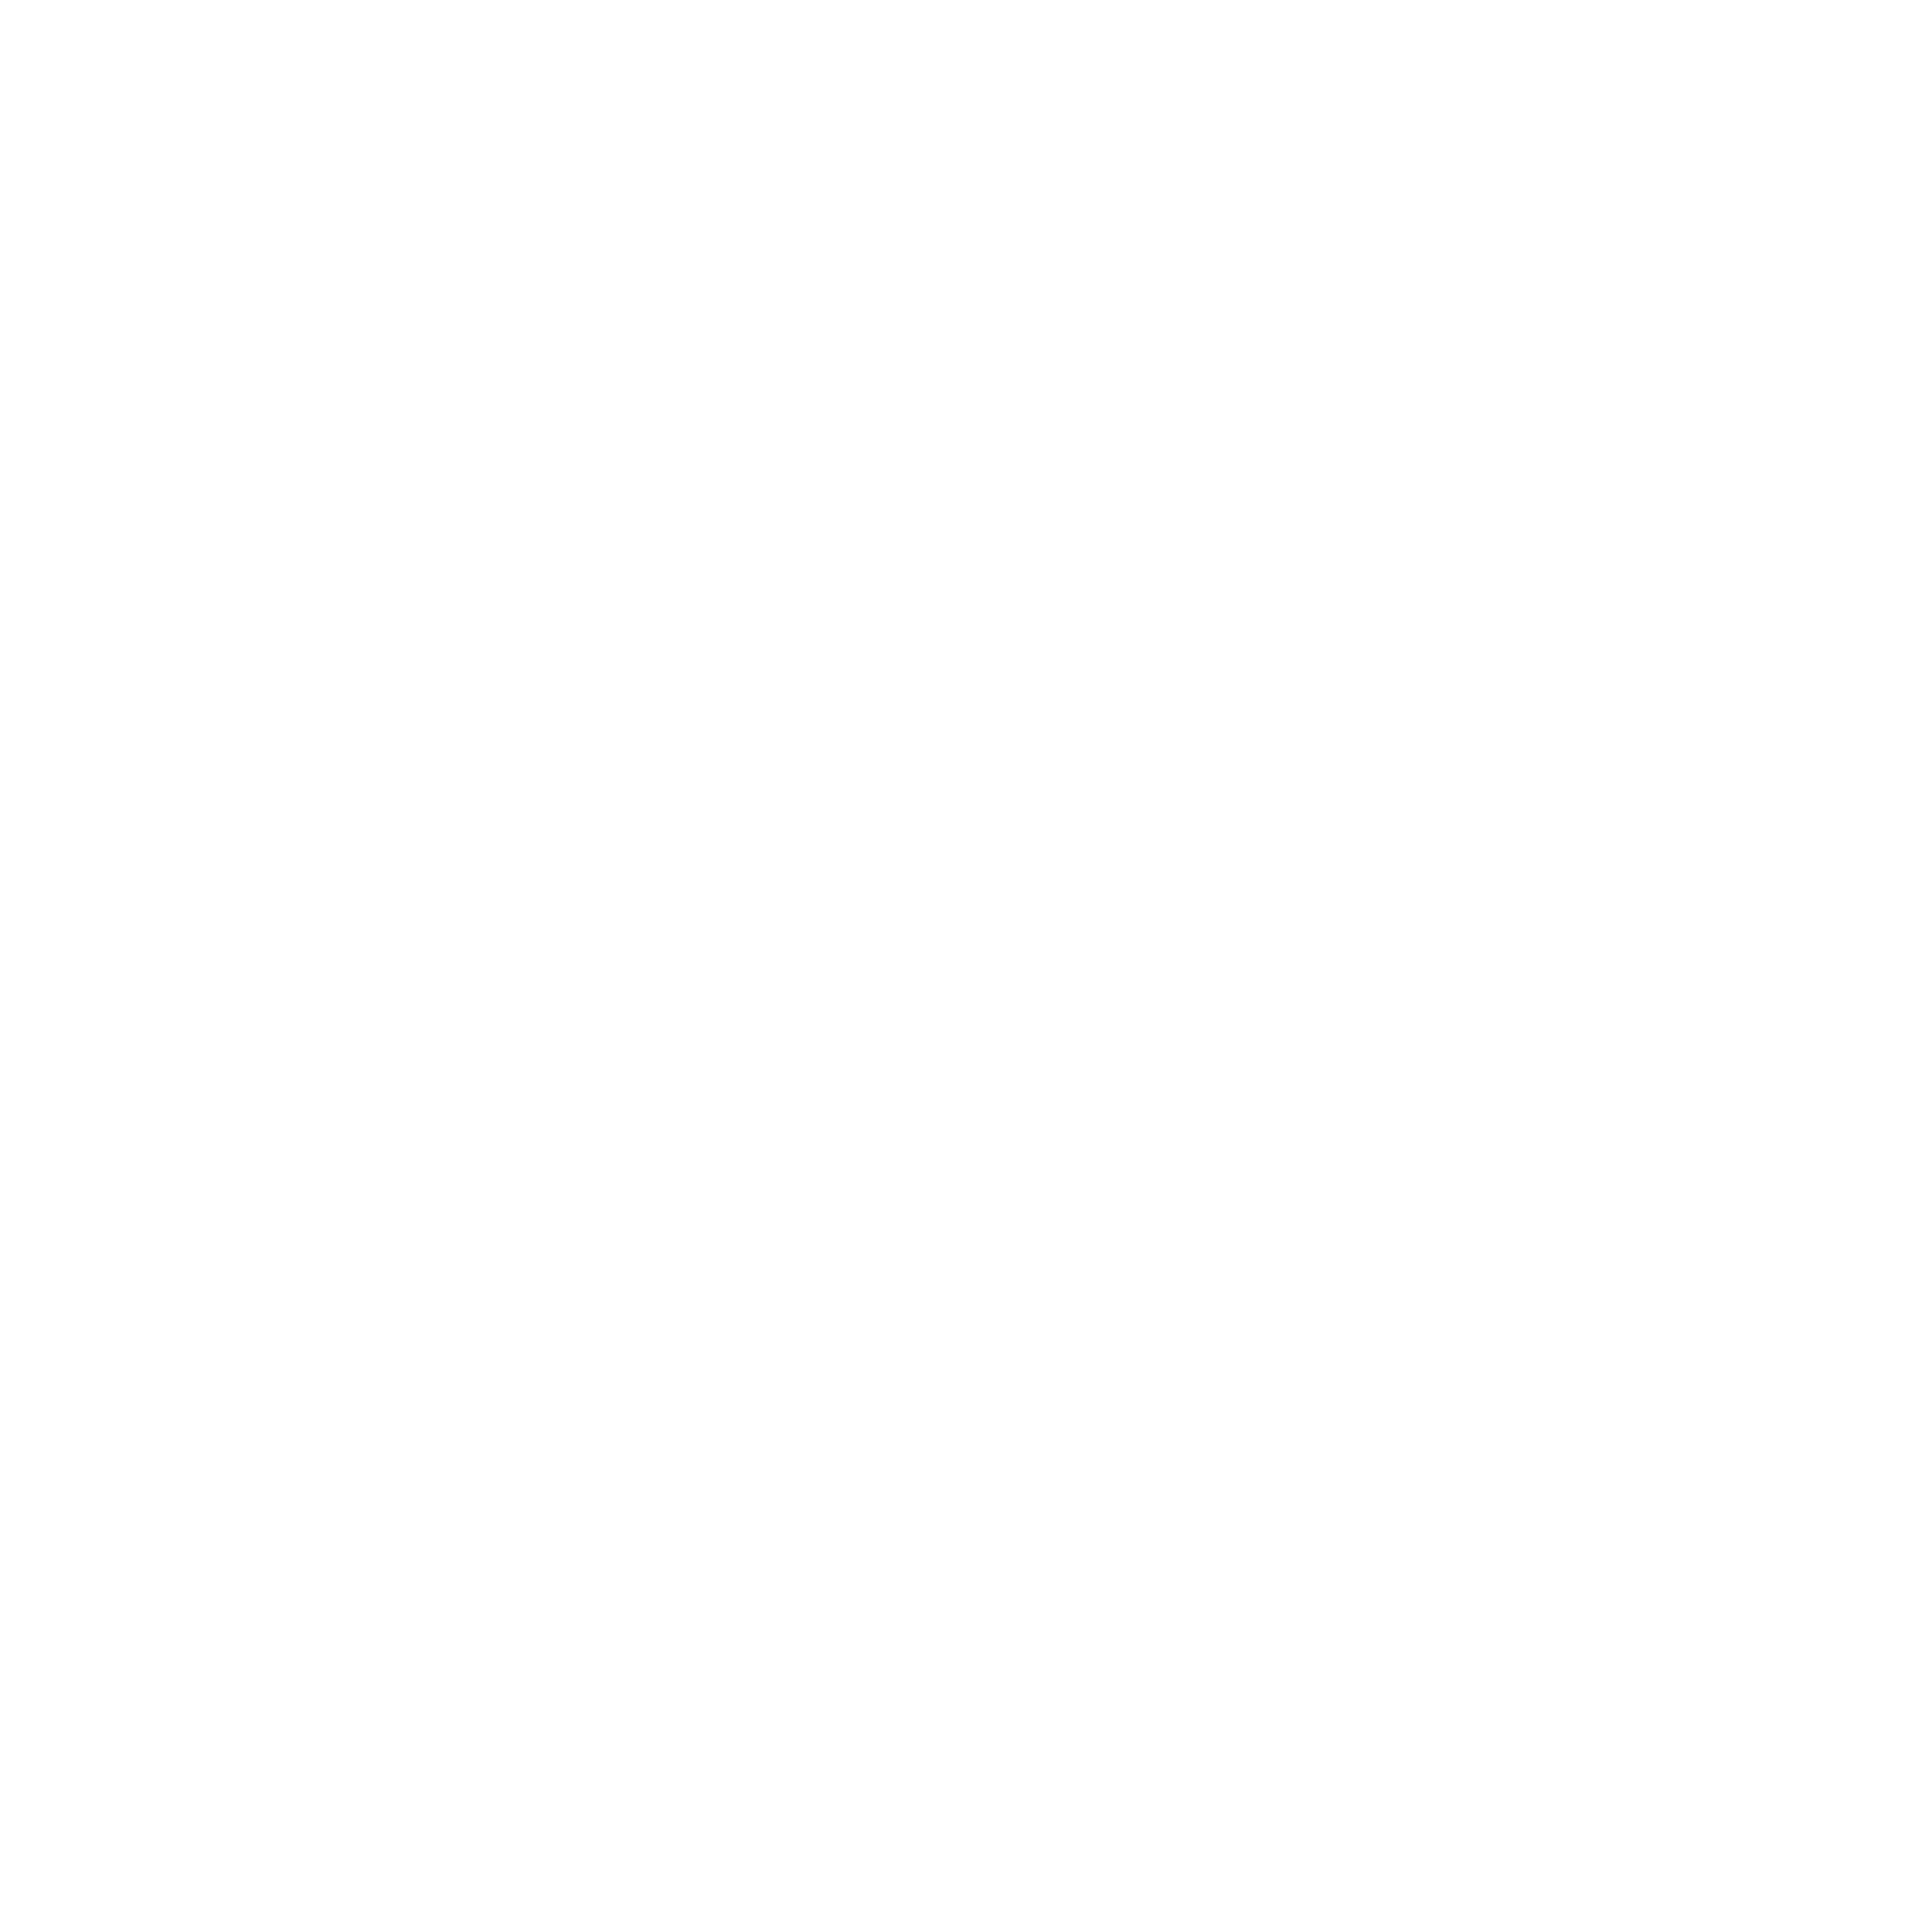 Black and Yellow Bird Logo - YellowBird Foundation Logo PNG Transparent & SVG Vector - Freebie Supply